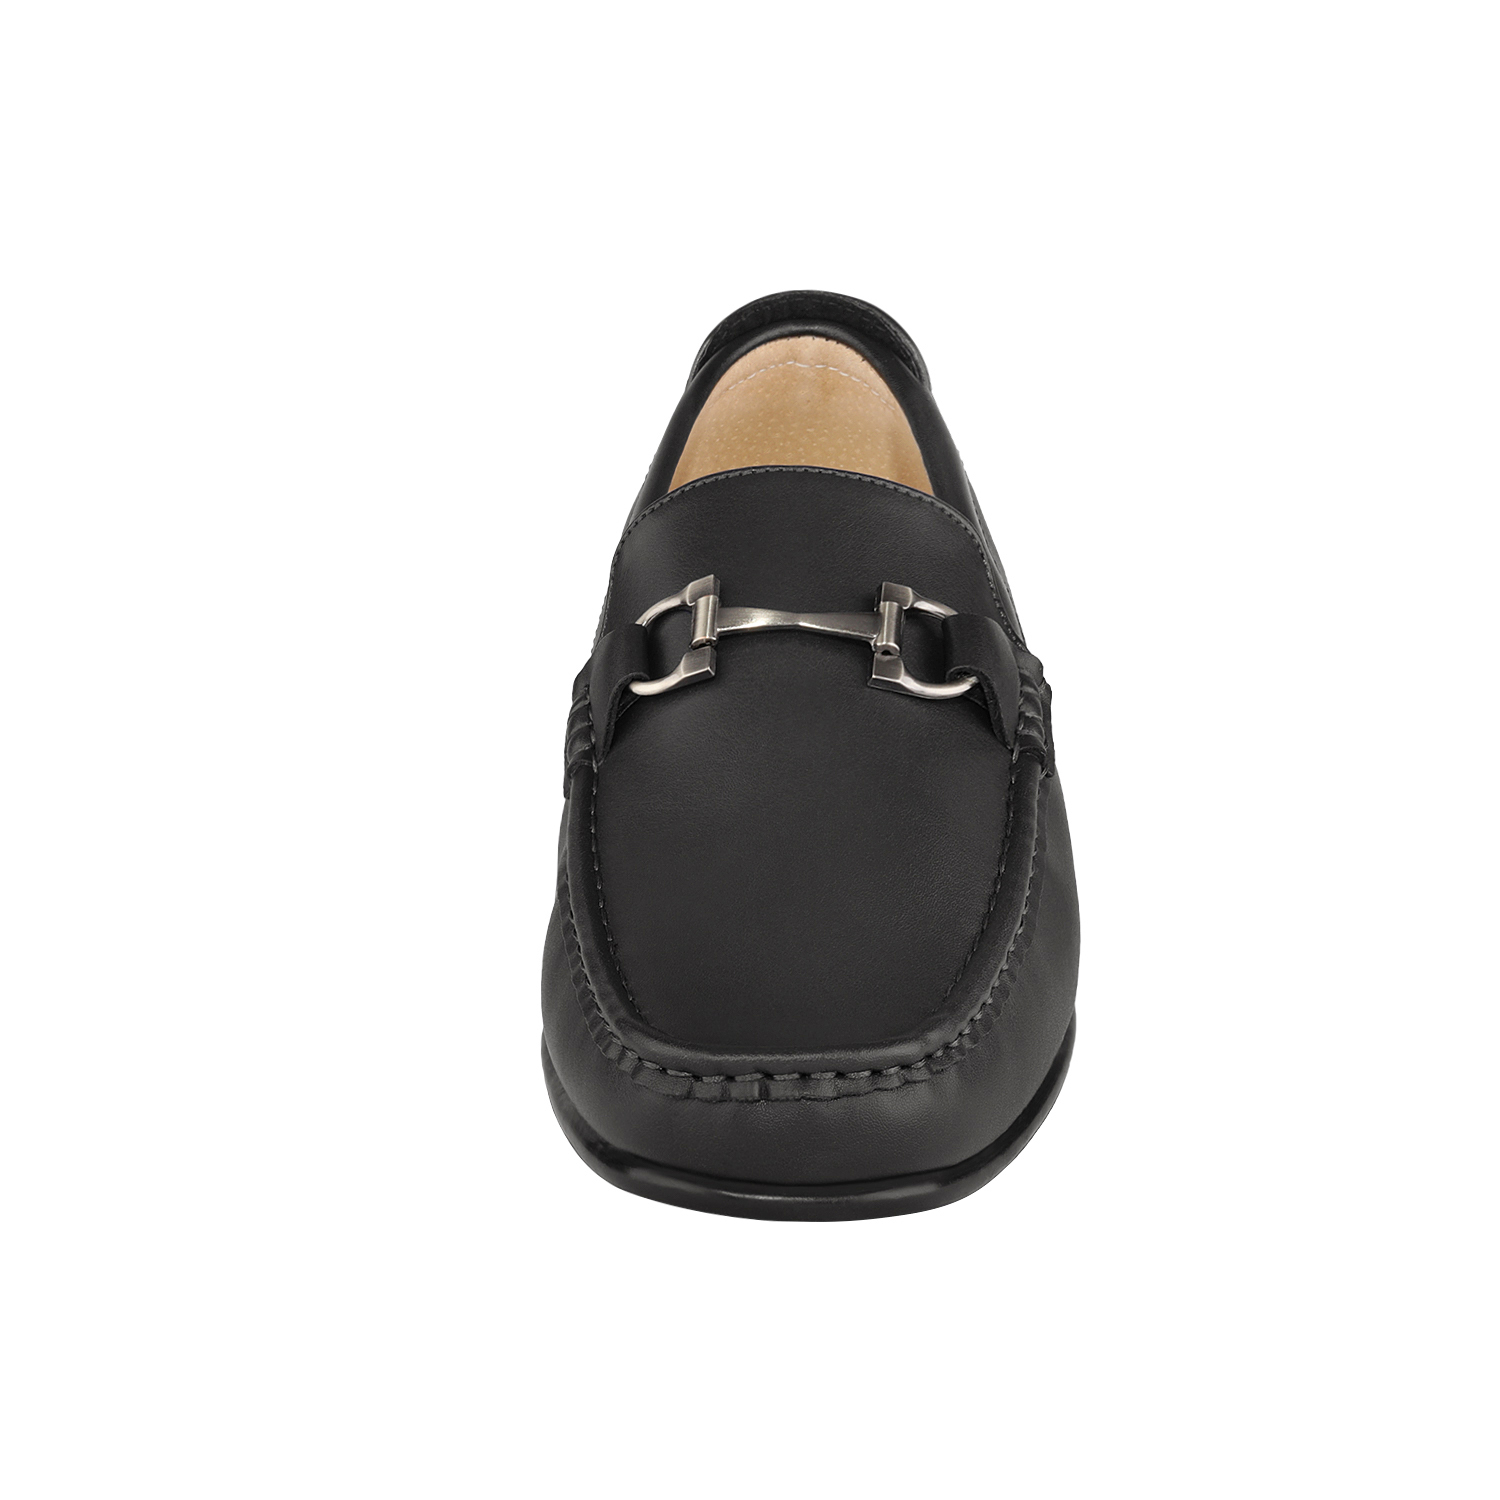 Bruno Marc Men's Moccasin Loafer Shoes Men Dress Loafers Slip On Casual Penny Comfort Outdoor Loafers HENRY-1 BLACK Size 9 - image 2 of 5